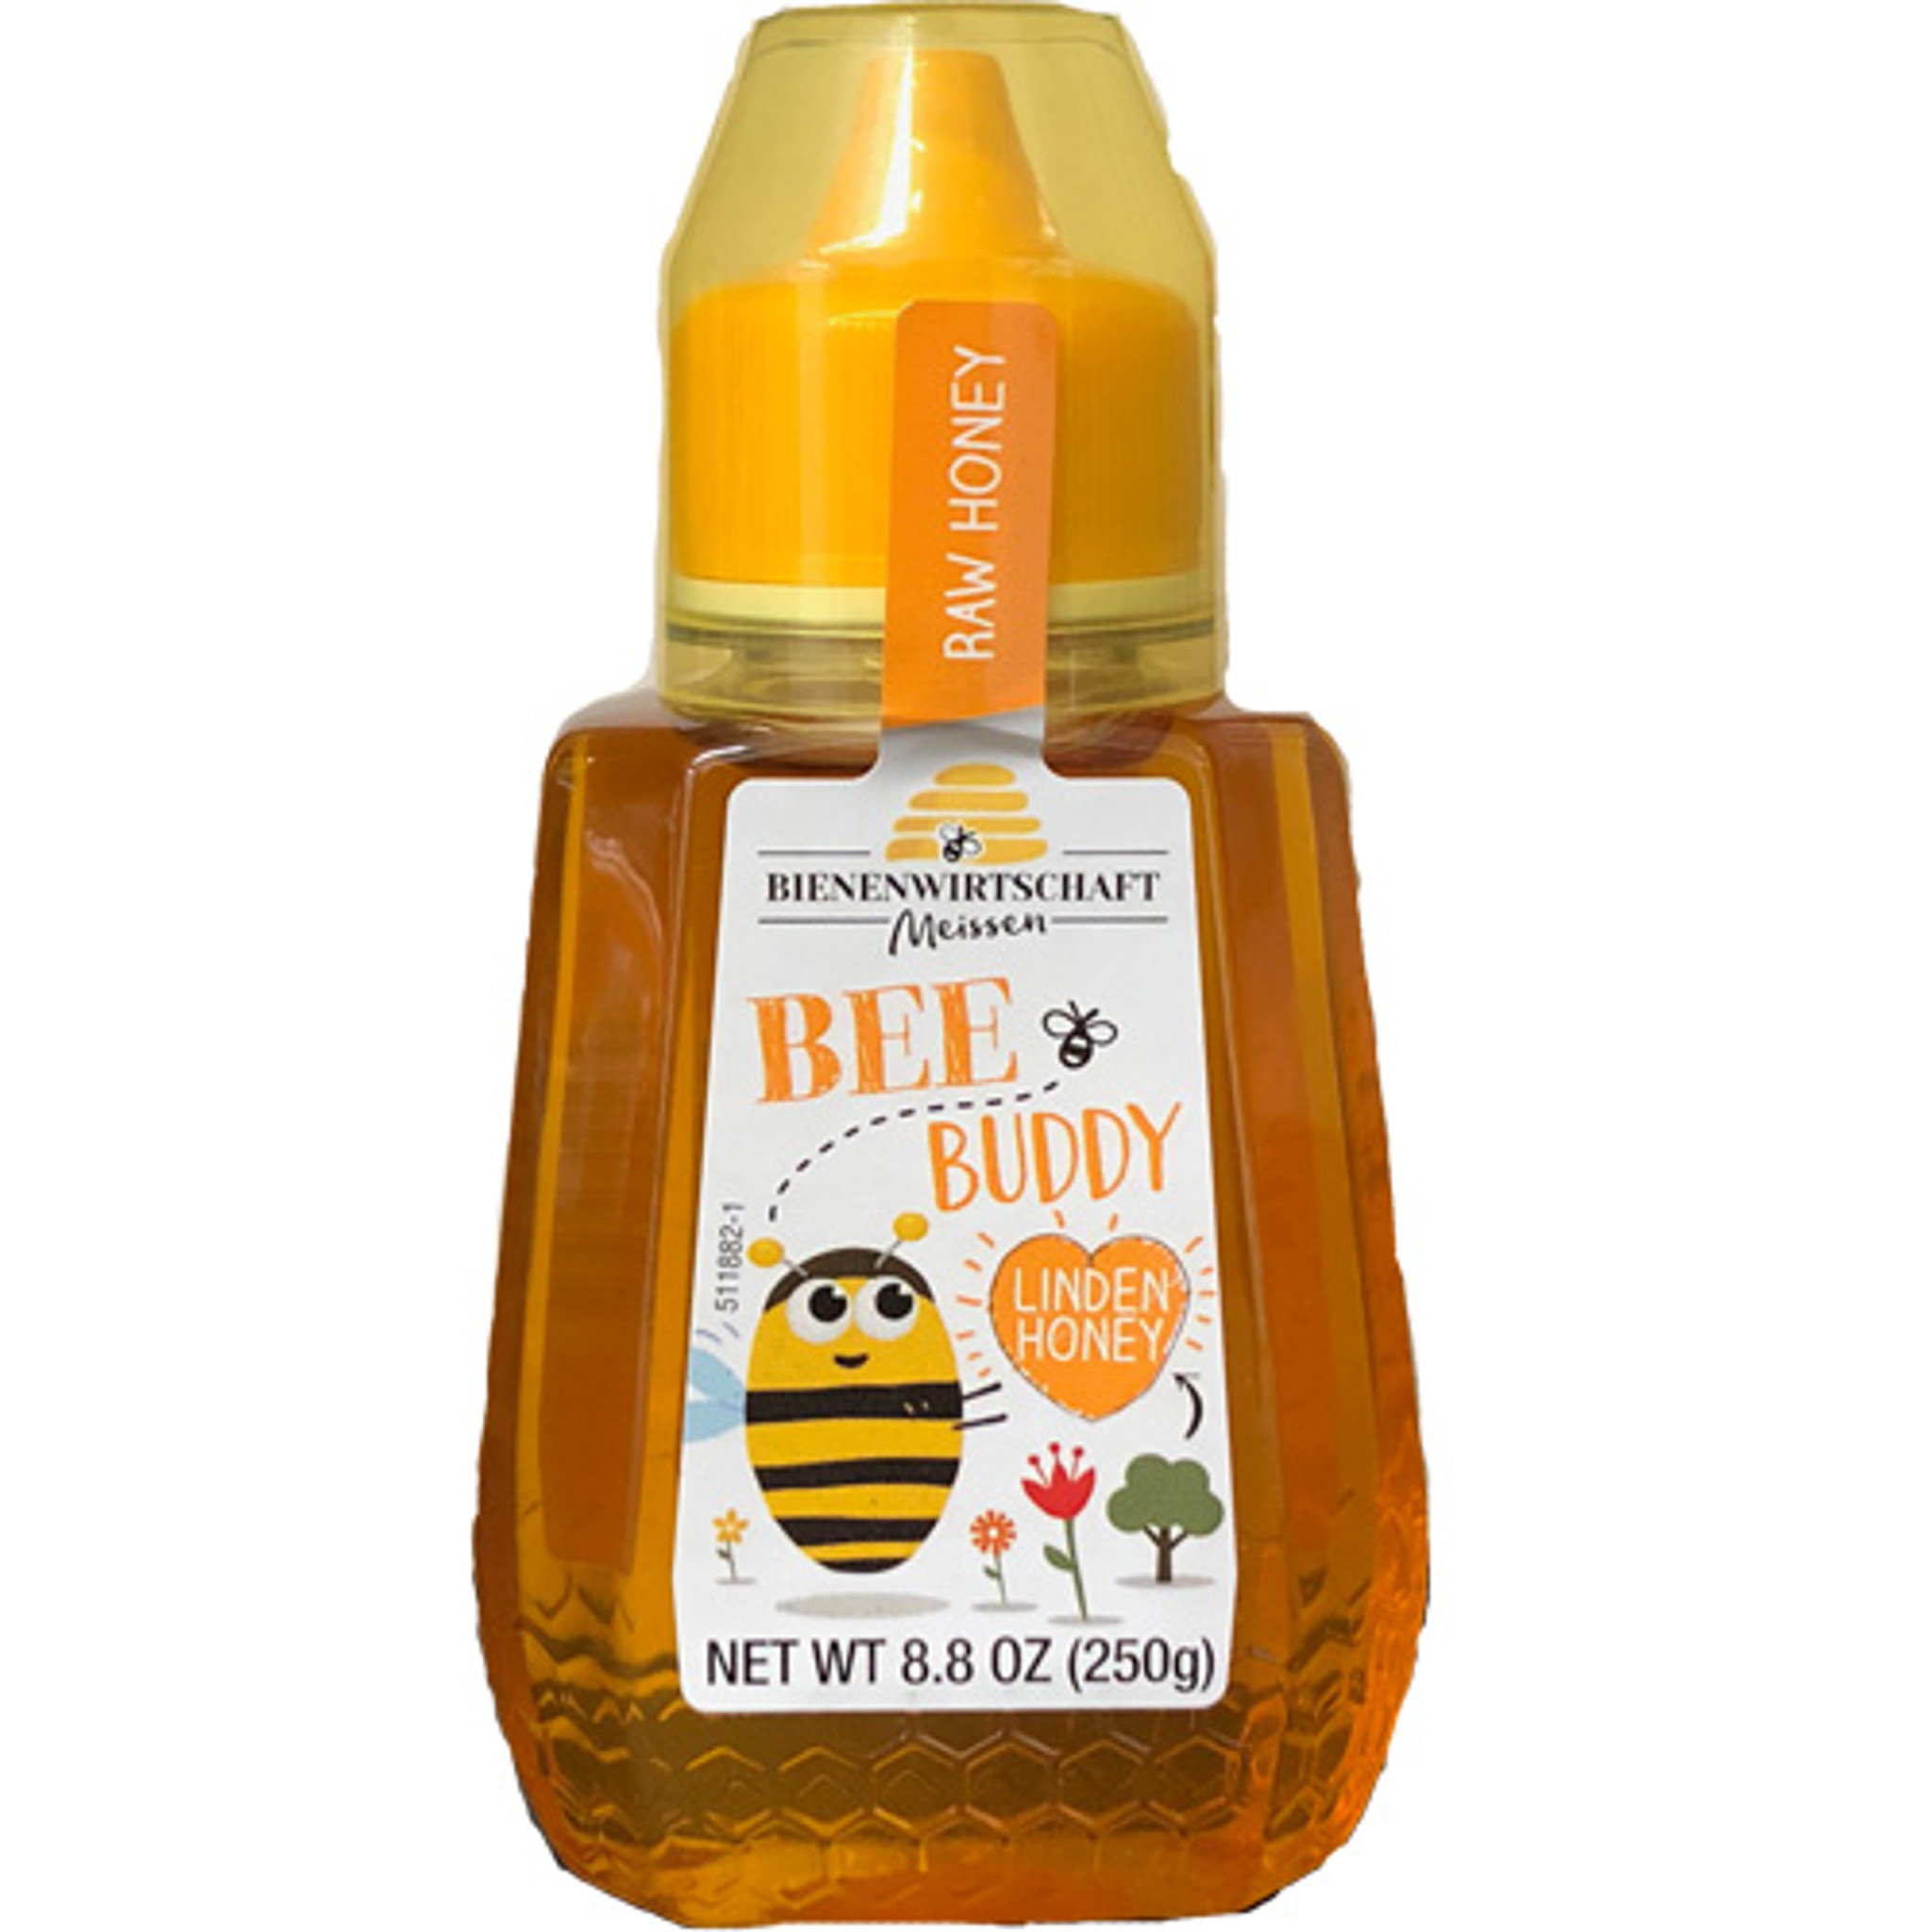 Breitsamer Honig Bee Buddy Pure Raw ACACIA Honey Squeeze Bottle 8.8 oz –  SecretPantryLA